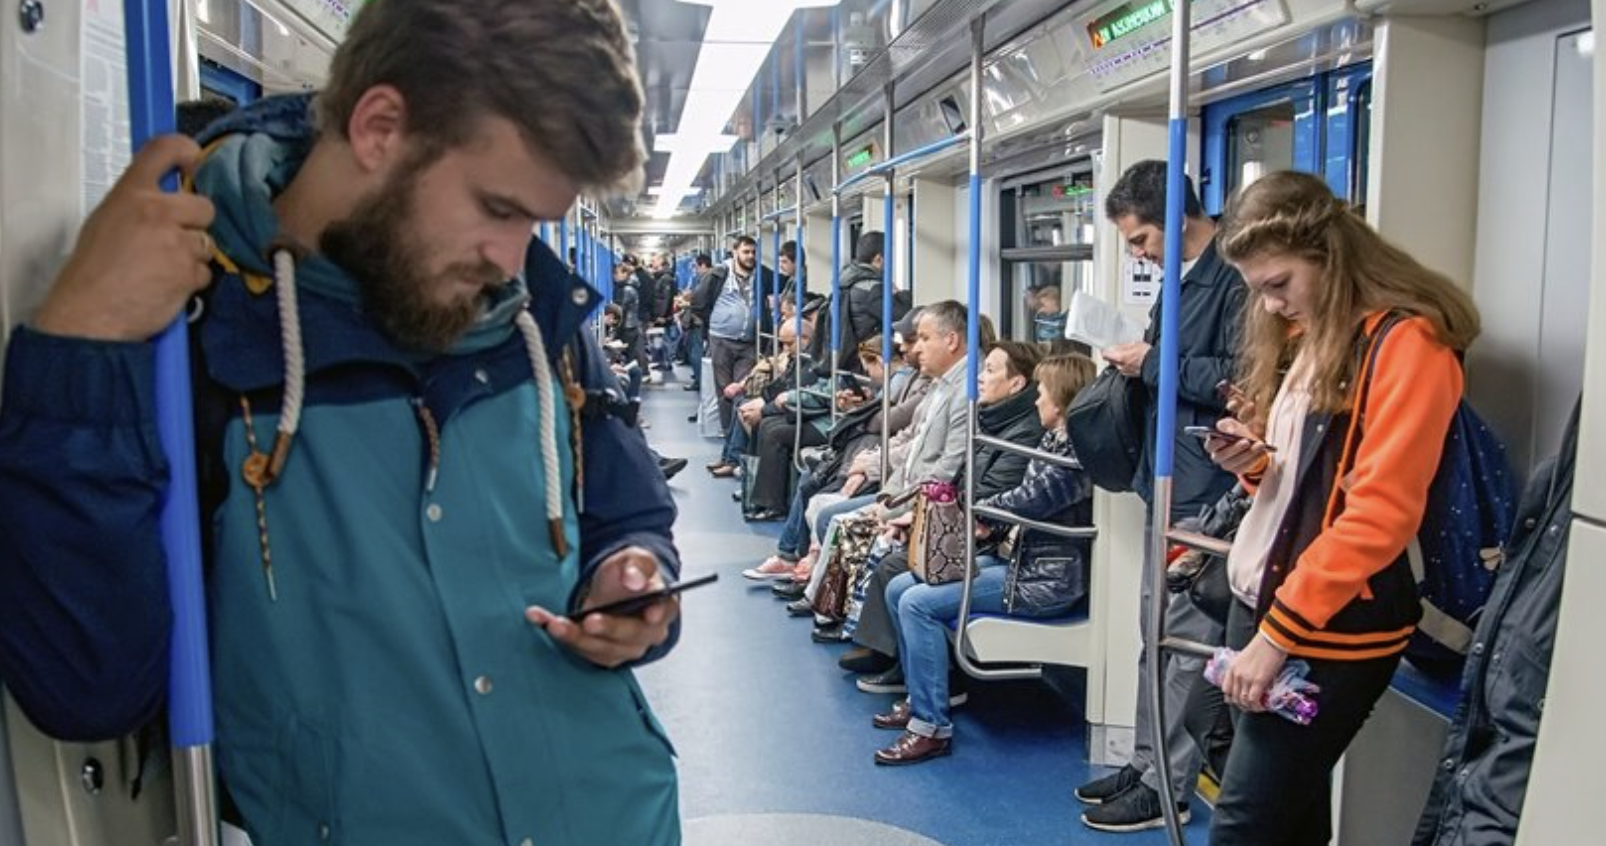 Люди с телефонами в метро. Фото с сайта мэра Москвы